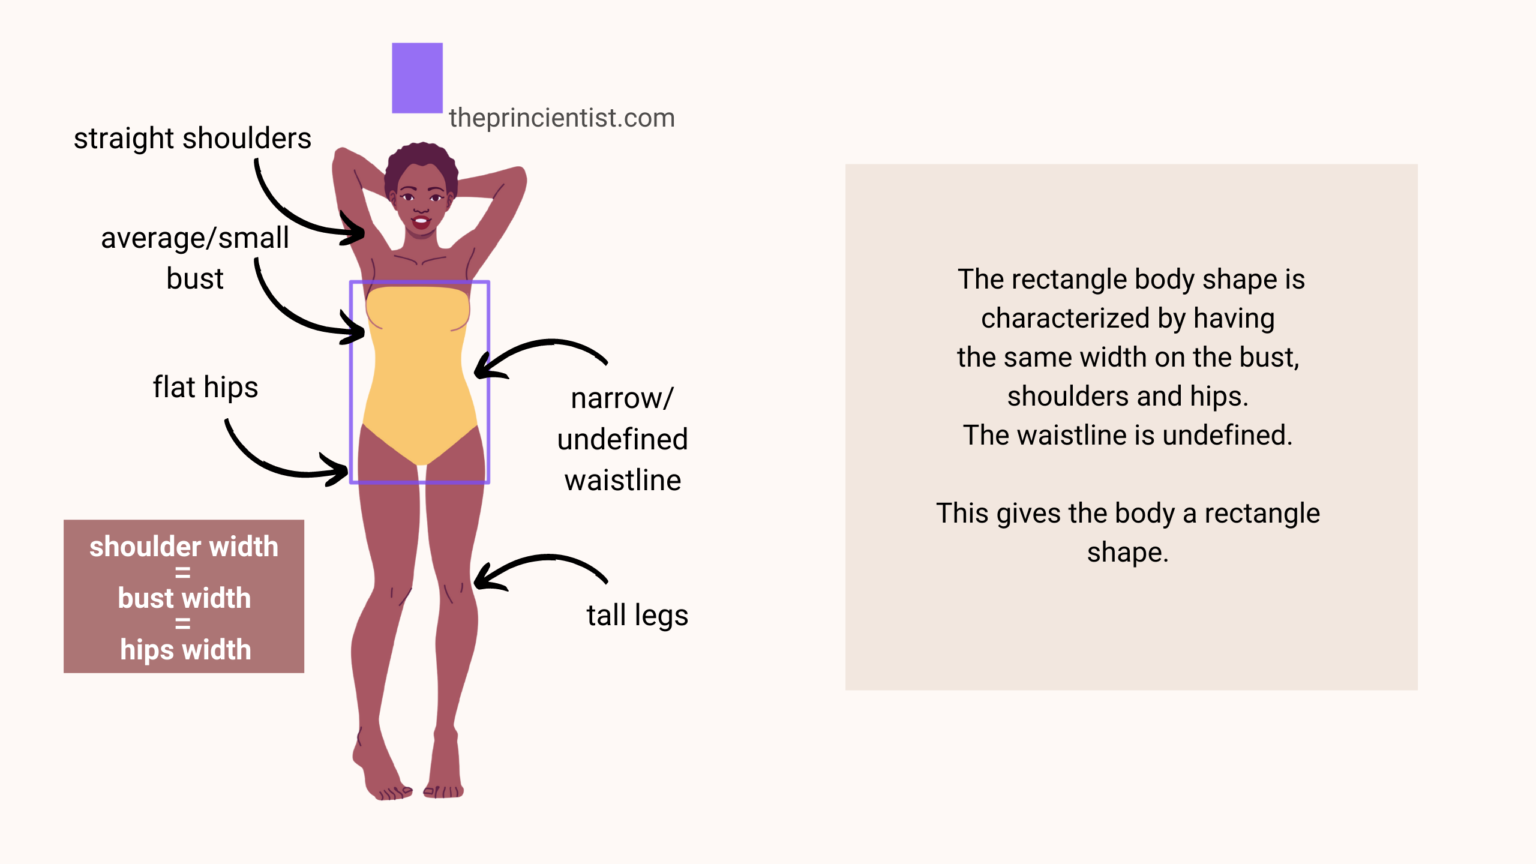 the rectangle body shape - characteristics